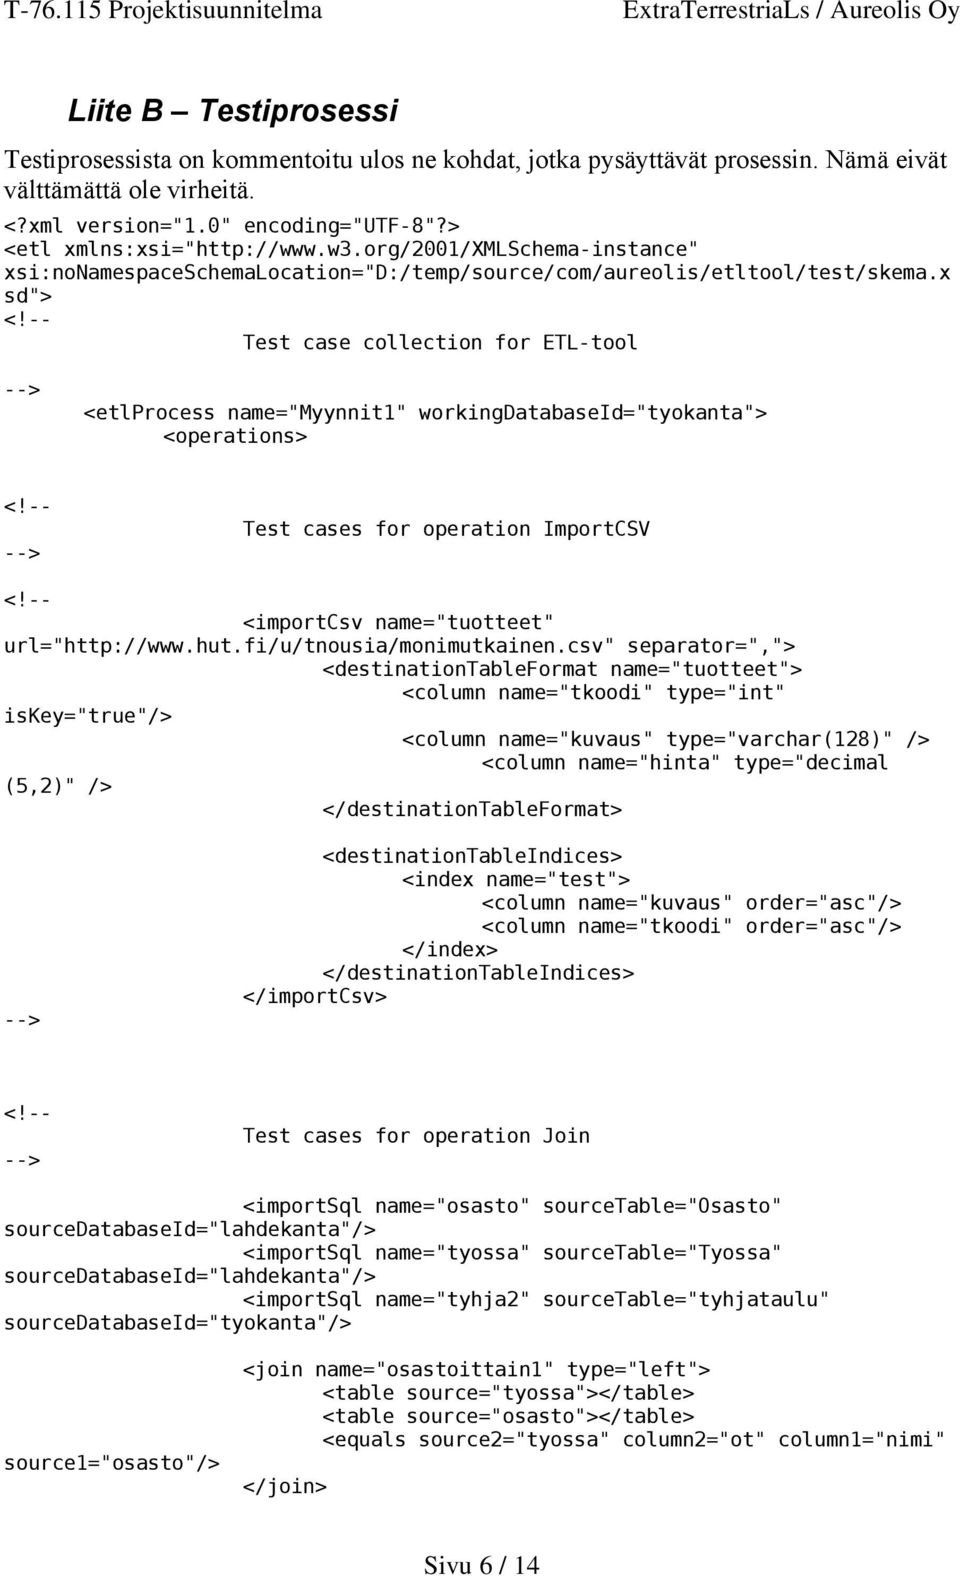 x sd"> Test case collection for ETL-tool <etlprocess name="myynnit1" workingdatabaseid="tyokanta"> <operations> Test cases for operation ImportCSV <importcsv name="tuotteet" url="http://www.hut.